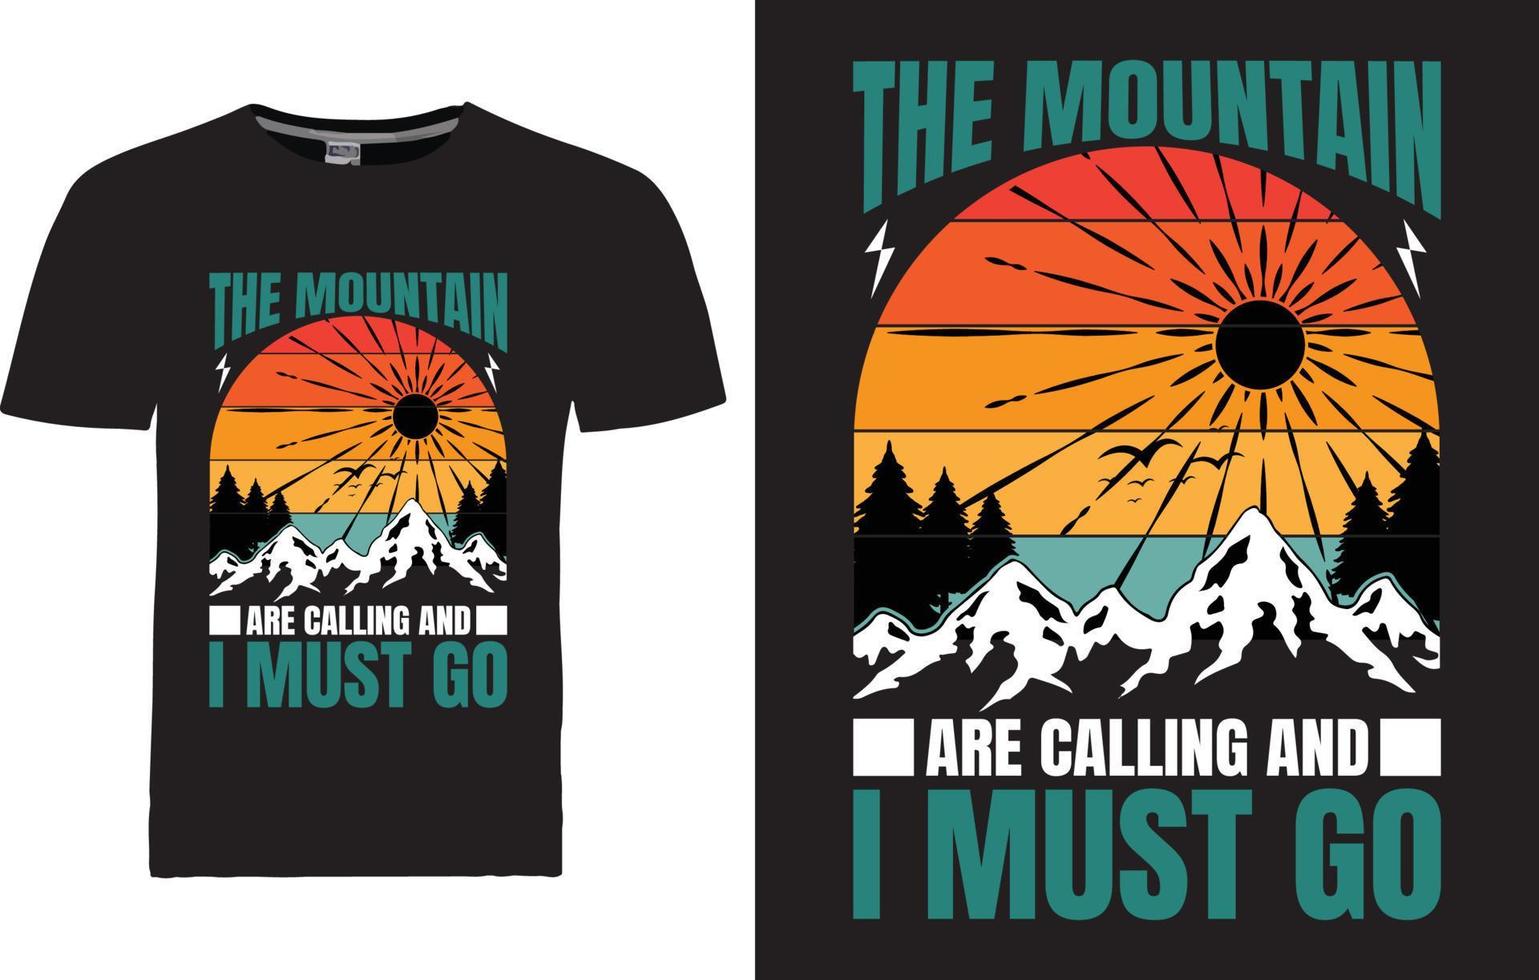 design t-shirt da montagna vettore